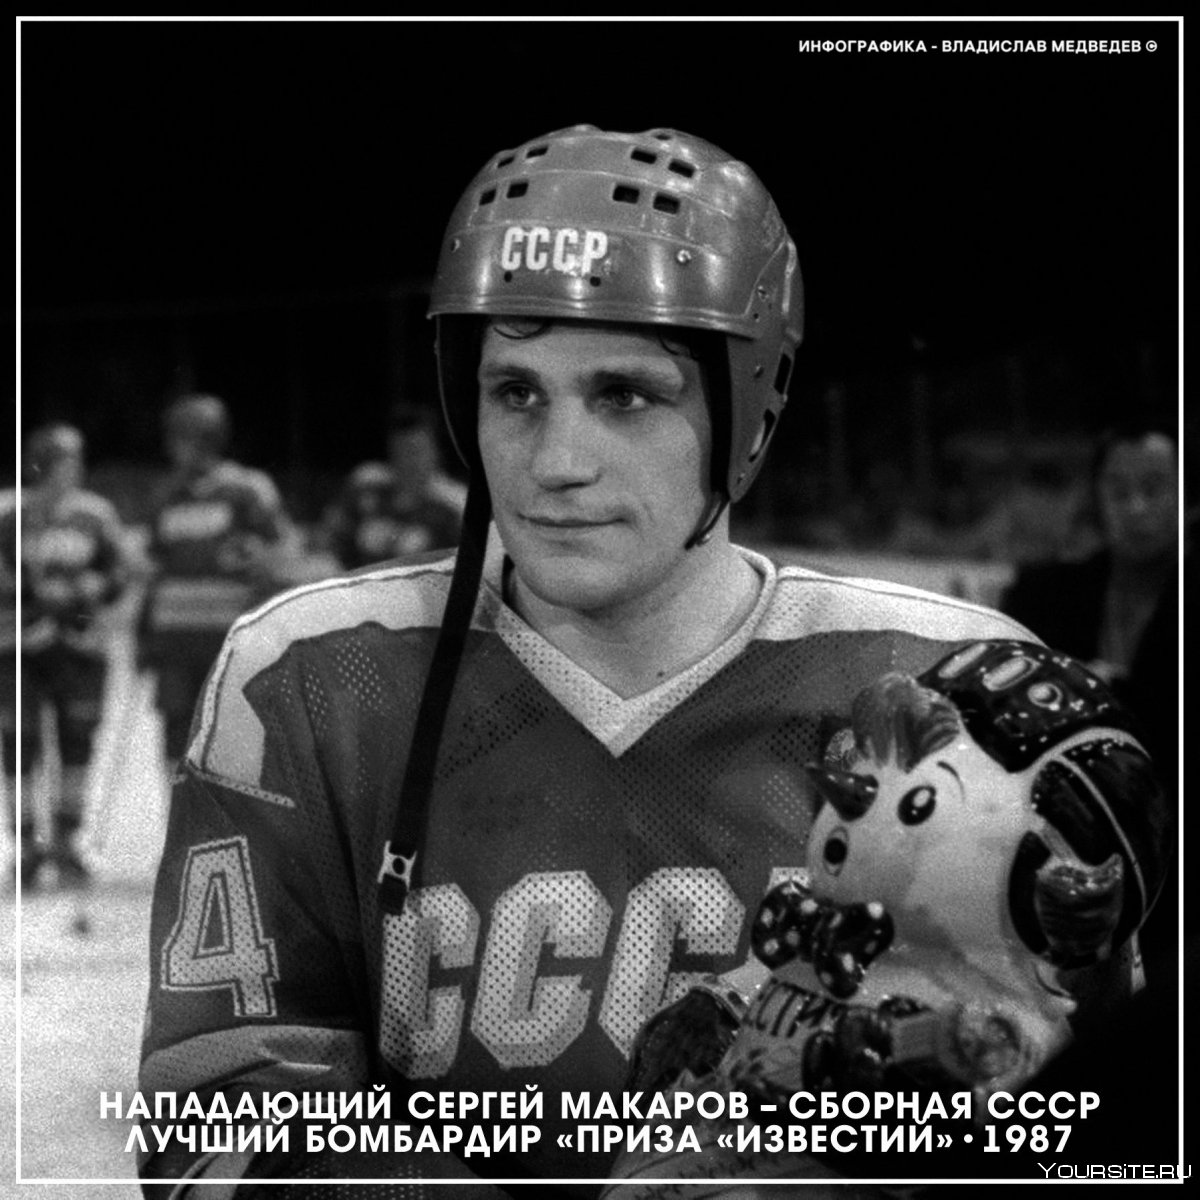 Макаров Сергей Михайлович хоккеист